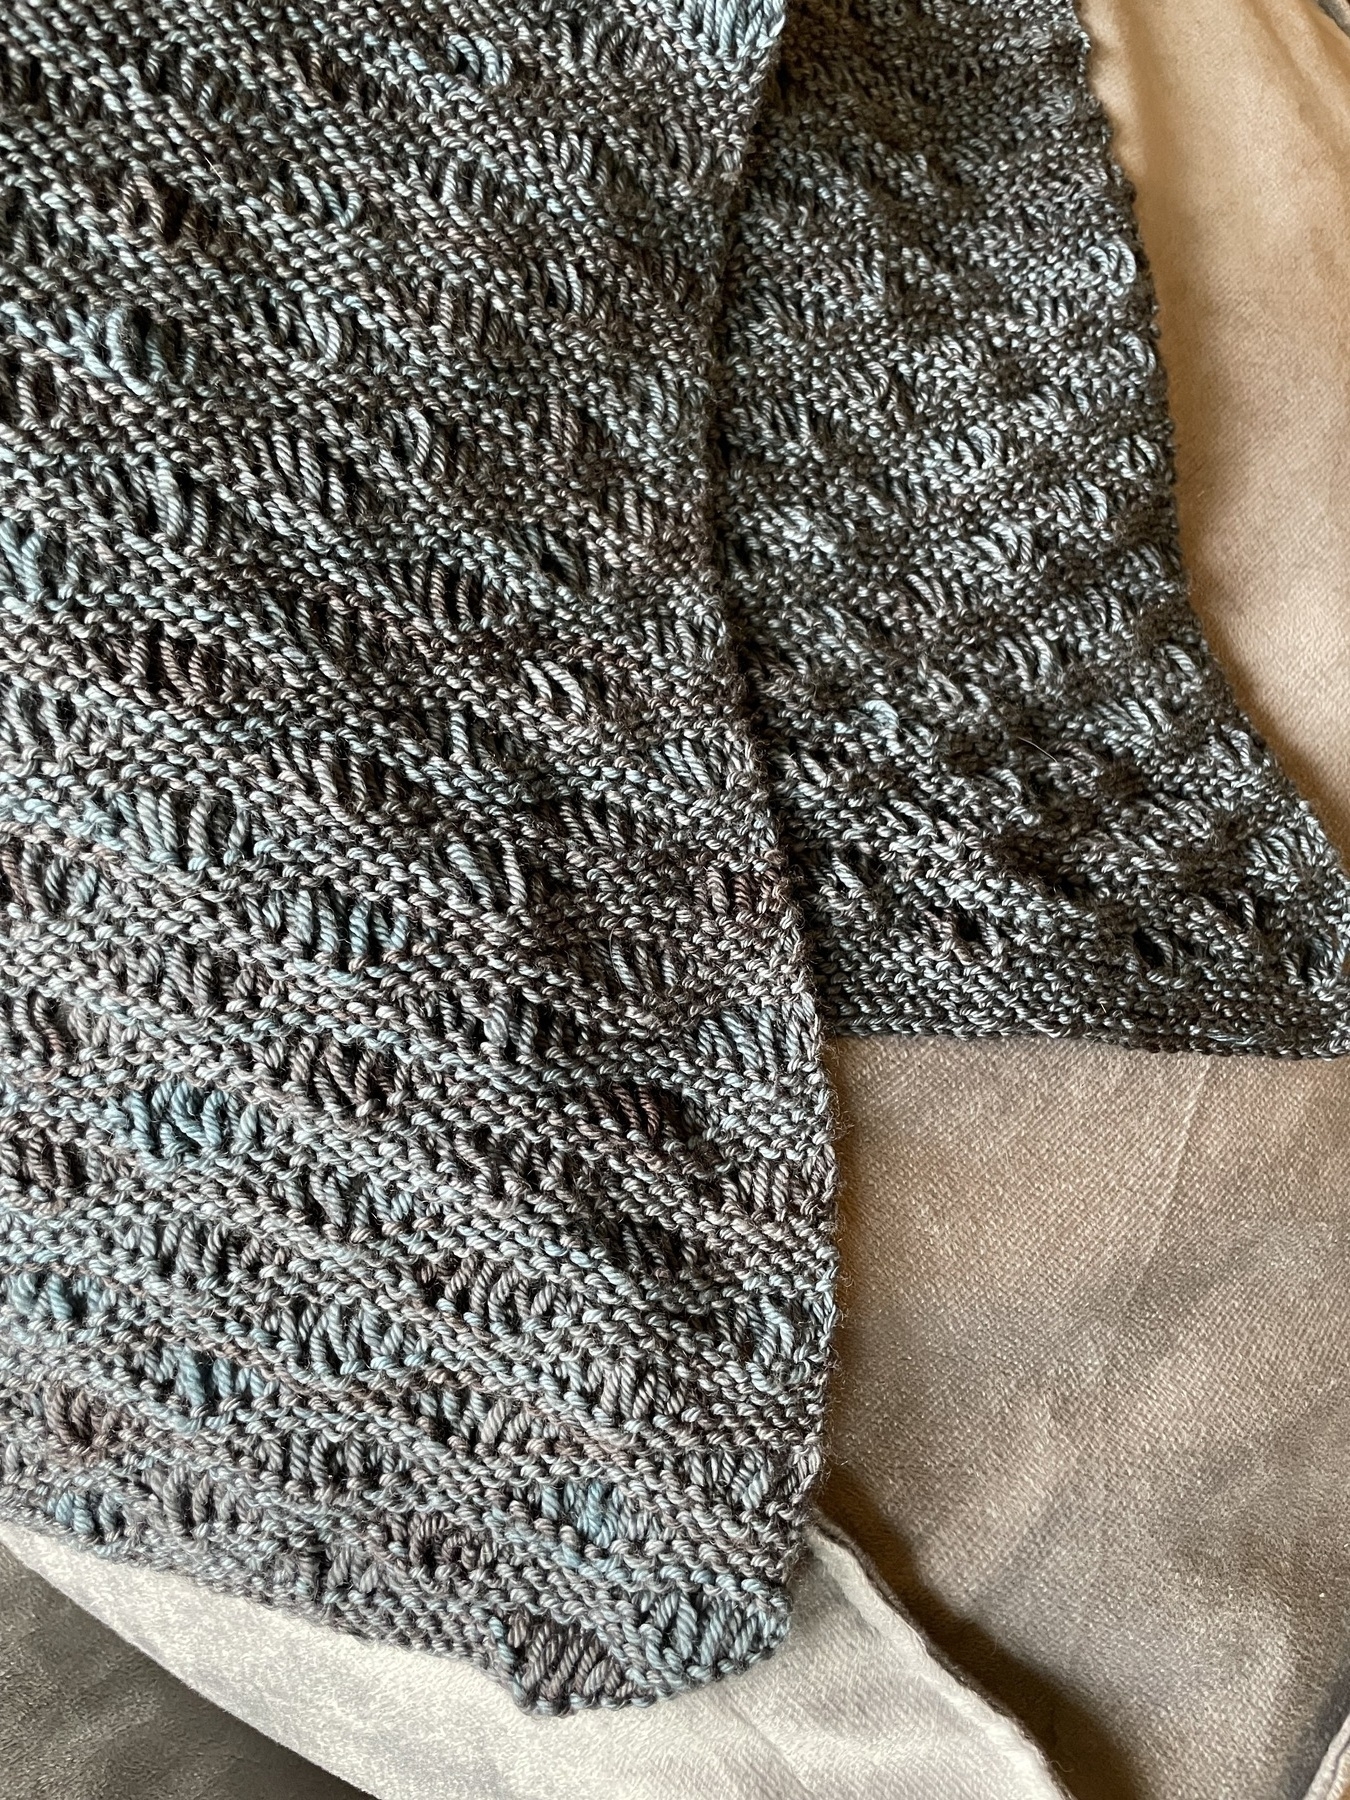 knitted scarf with a wavy drop-stitch pattern in steel blue yarn